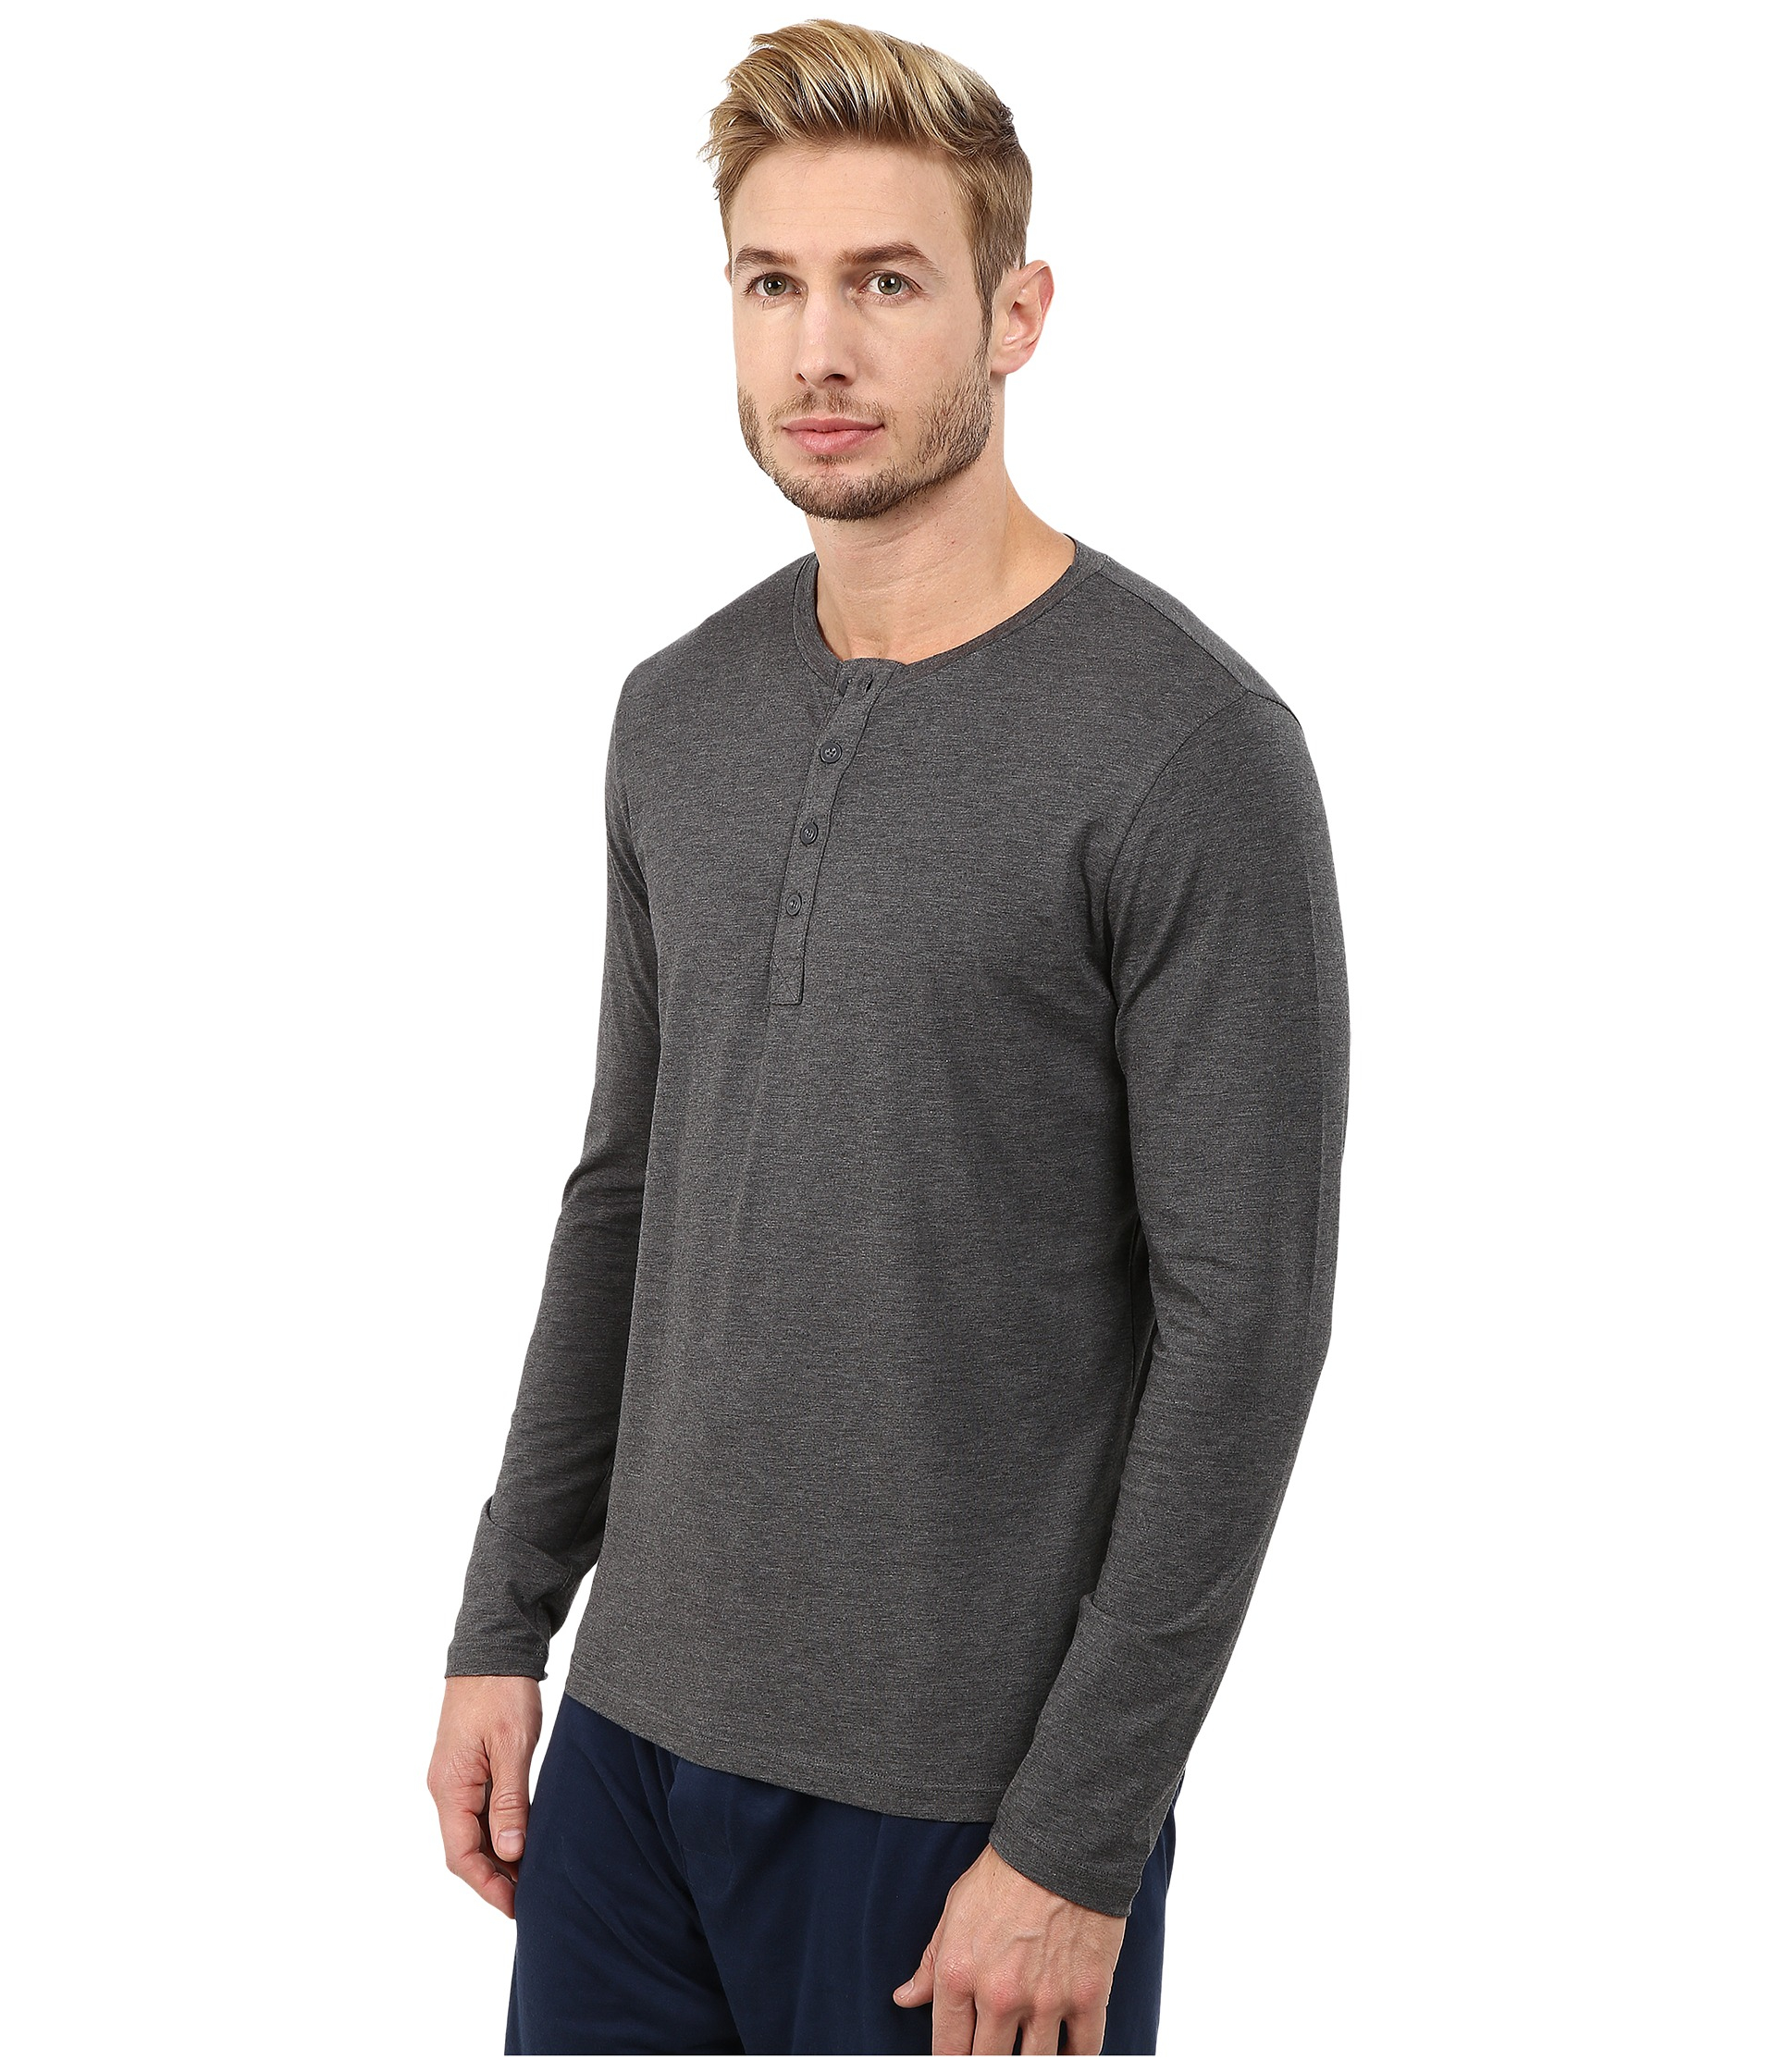 Lyst - BOSS Long Sleeve Balance Shirt in Gray for Men